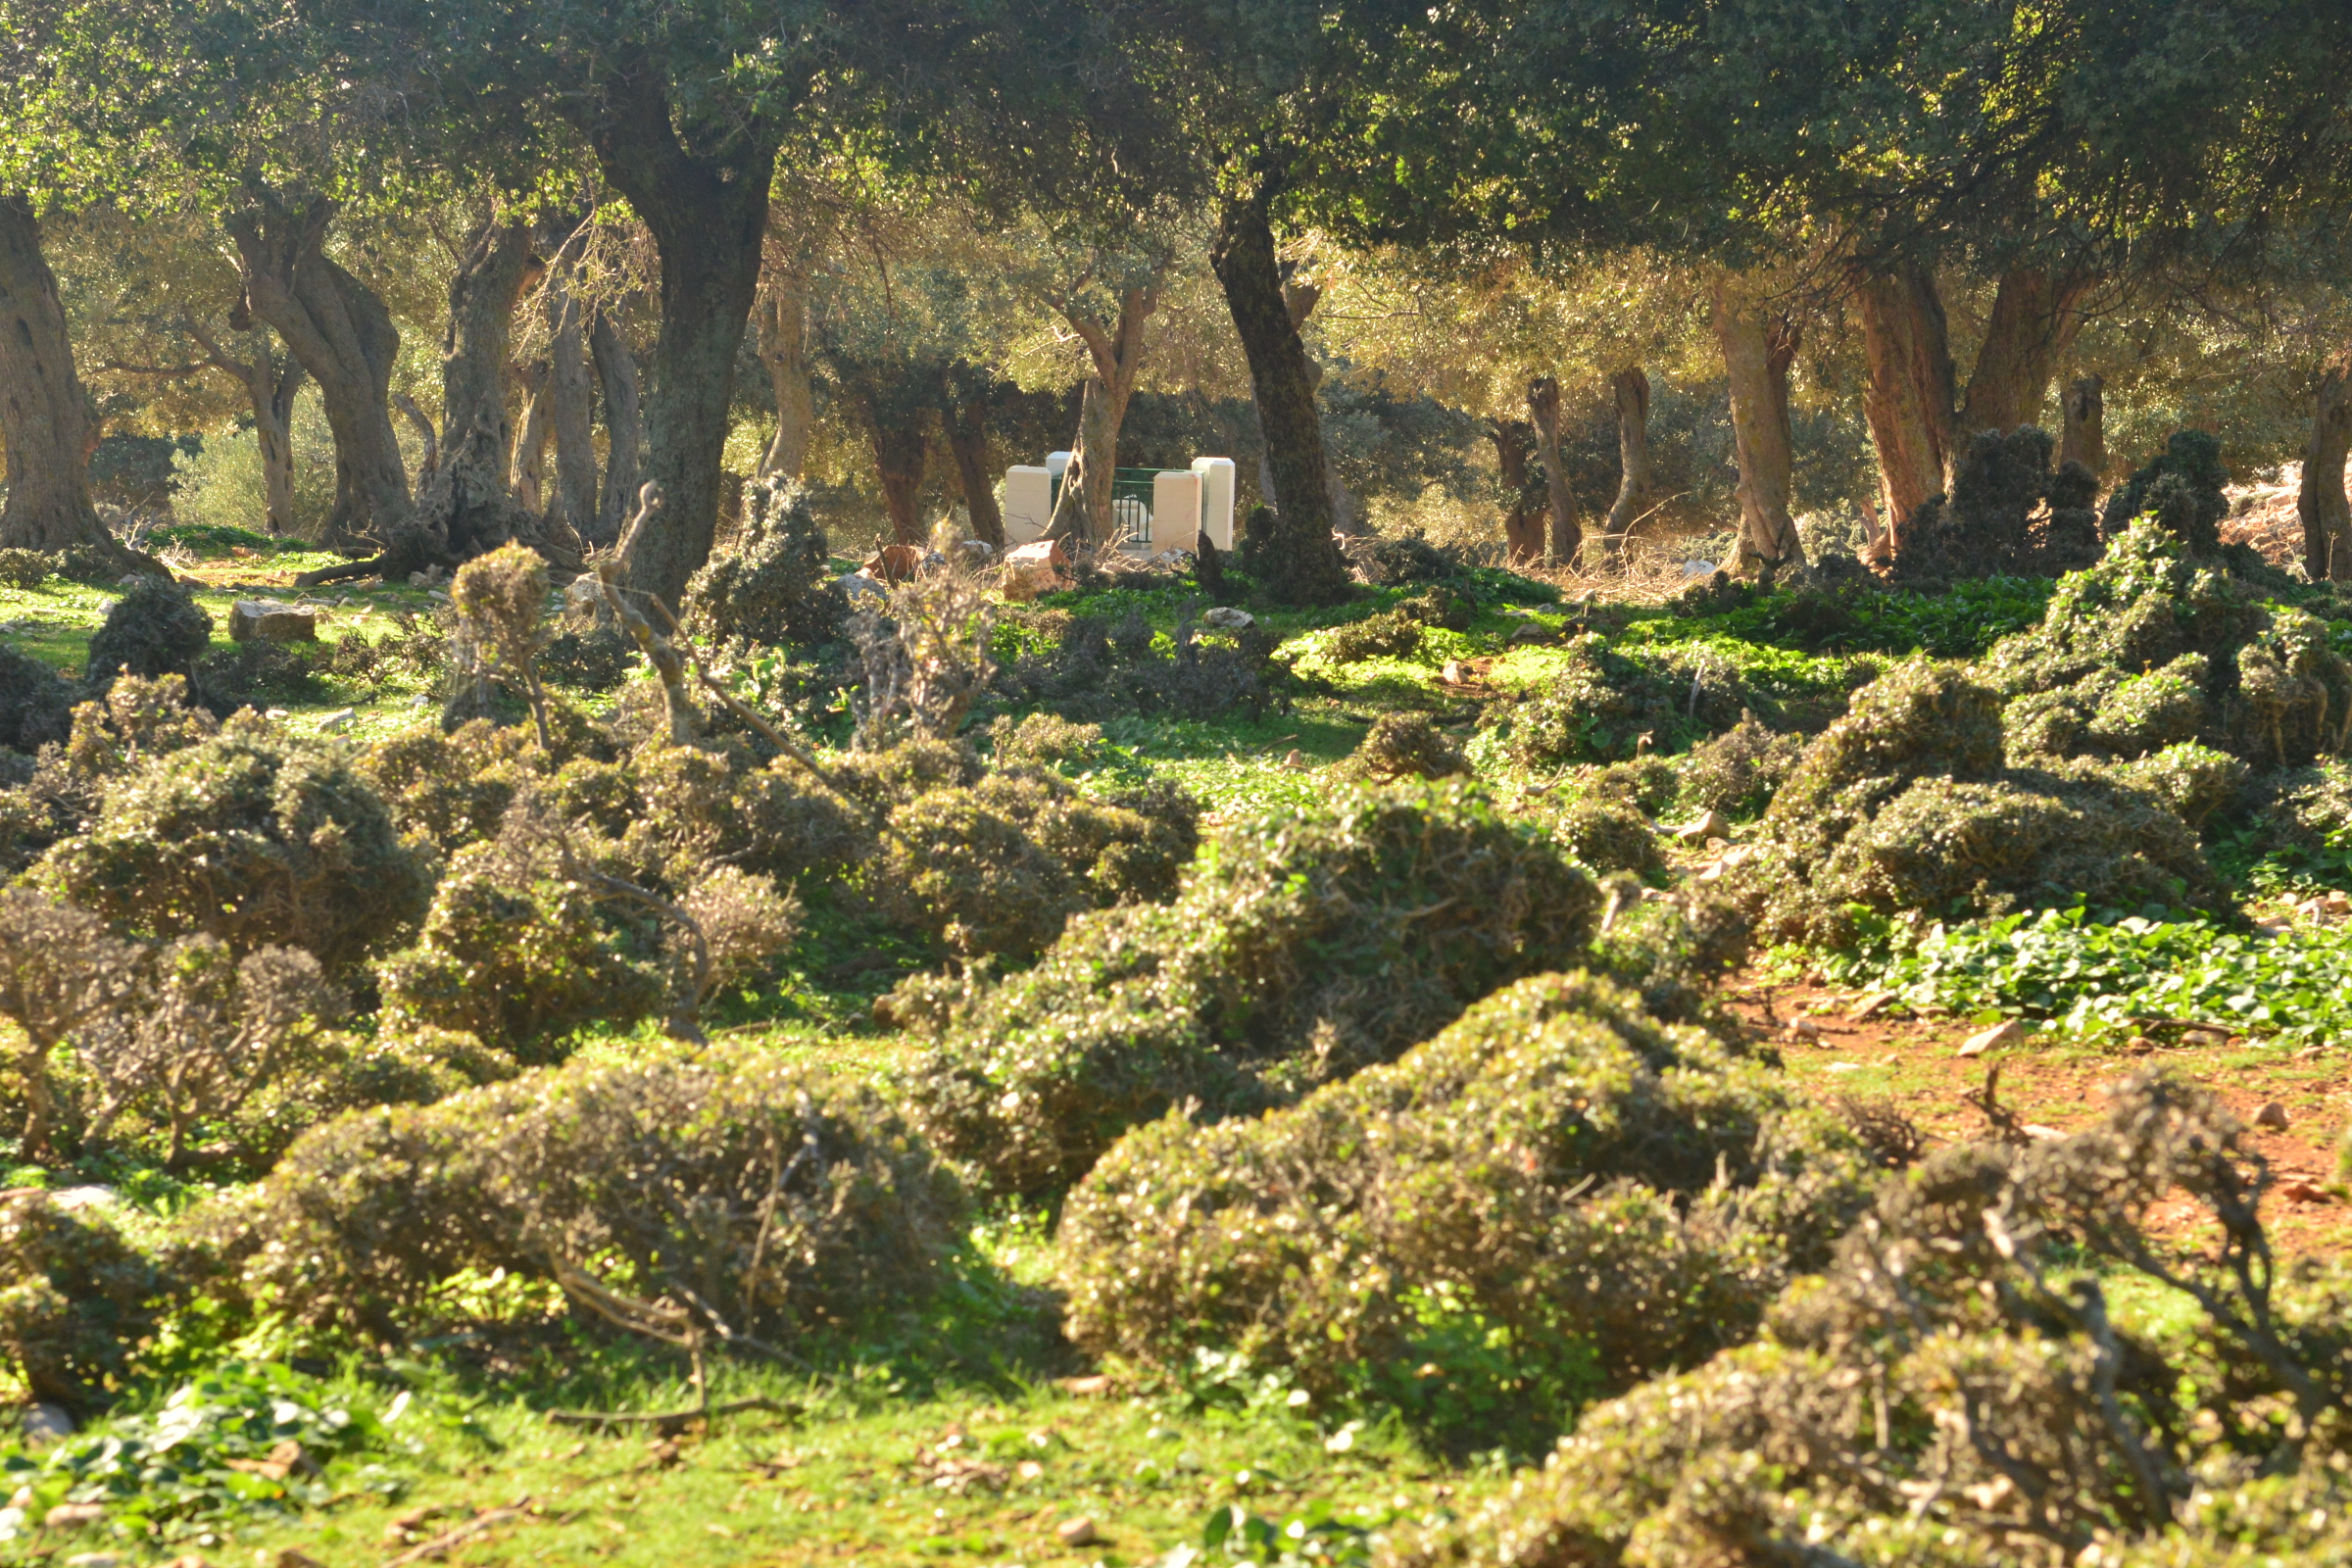 South Skyros vegetation